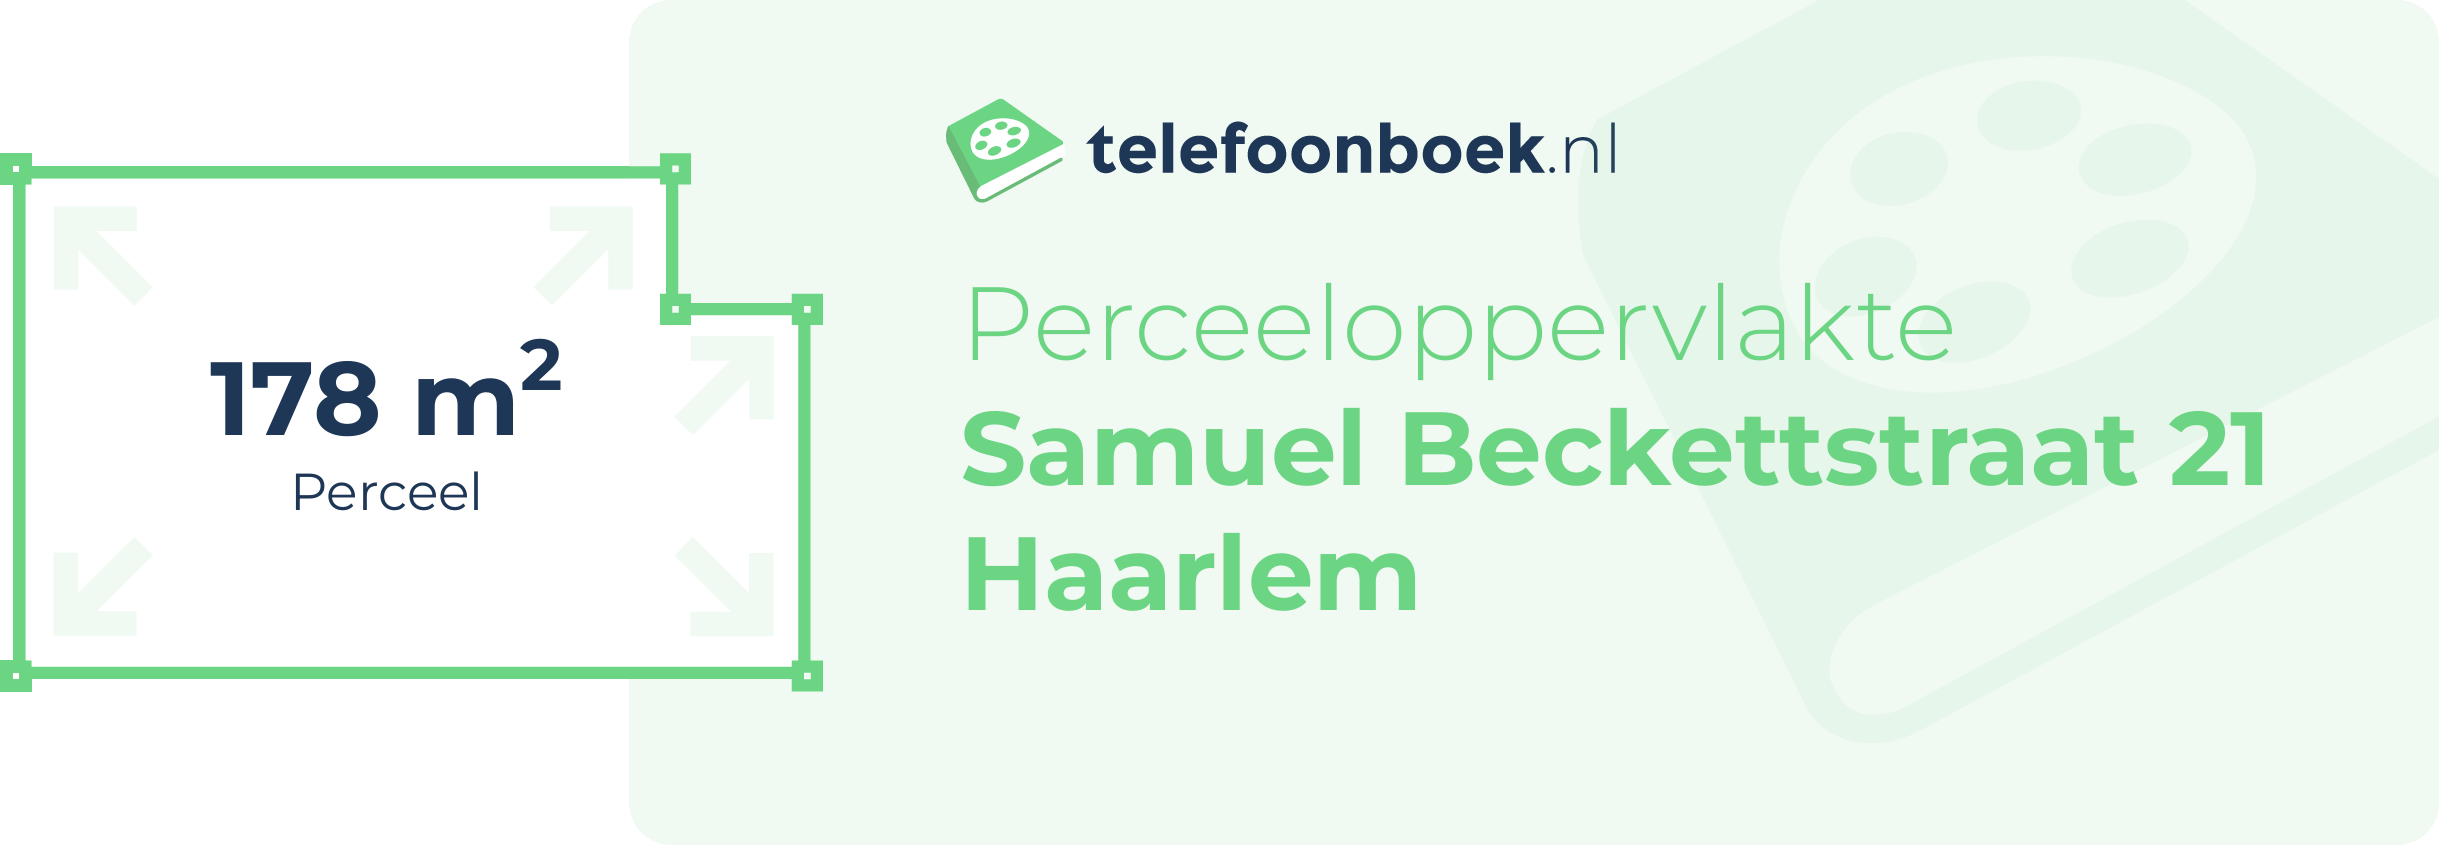 Perceeloppervlakte Samuel Beckettstraat 21 Haarlem